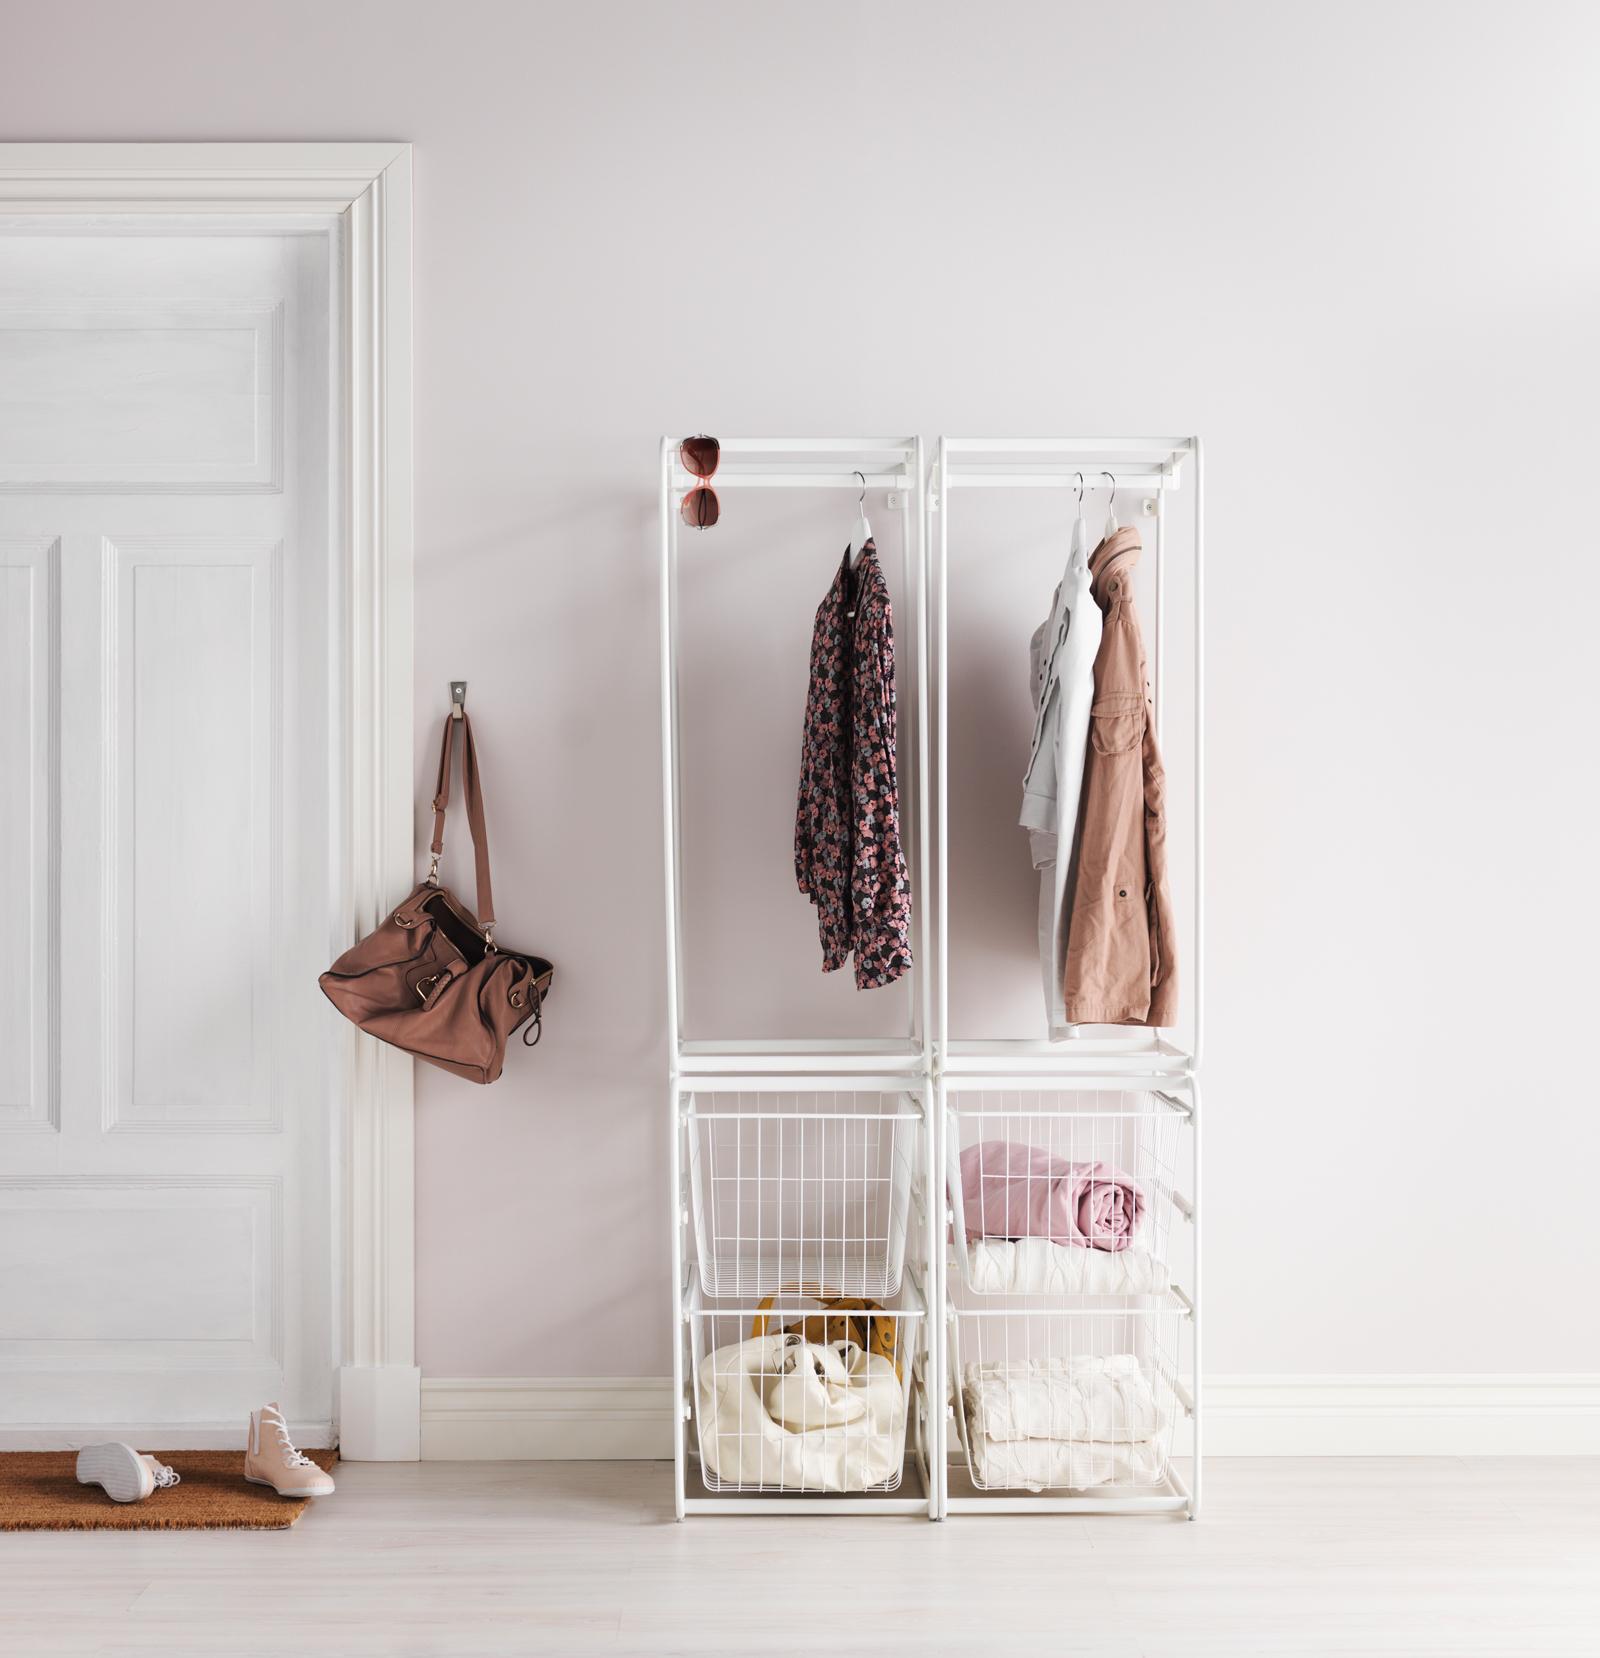 Garderobensystem im Flur #ikea #laminat #garderobenständer #fluraufbewahrung ©Inter IKEA Systems B.V.